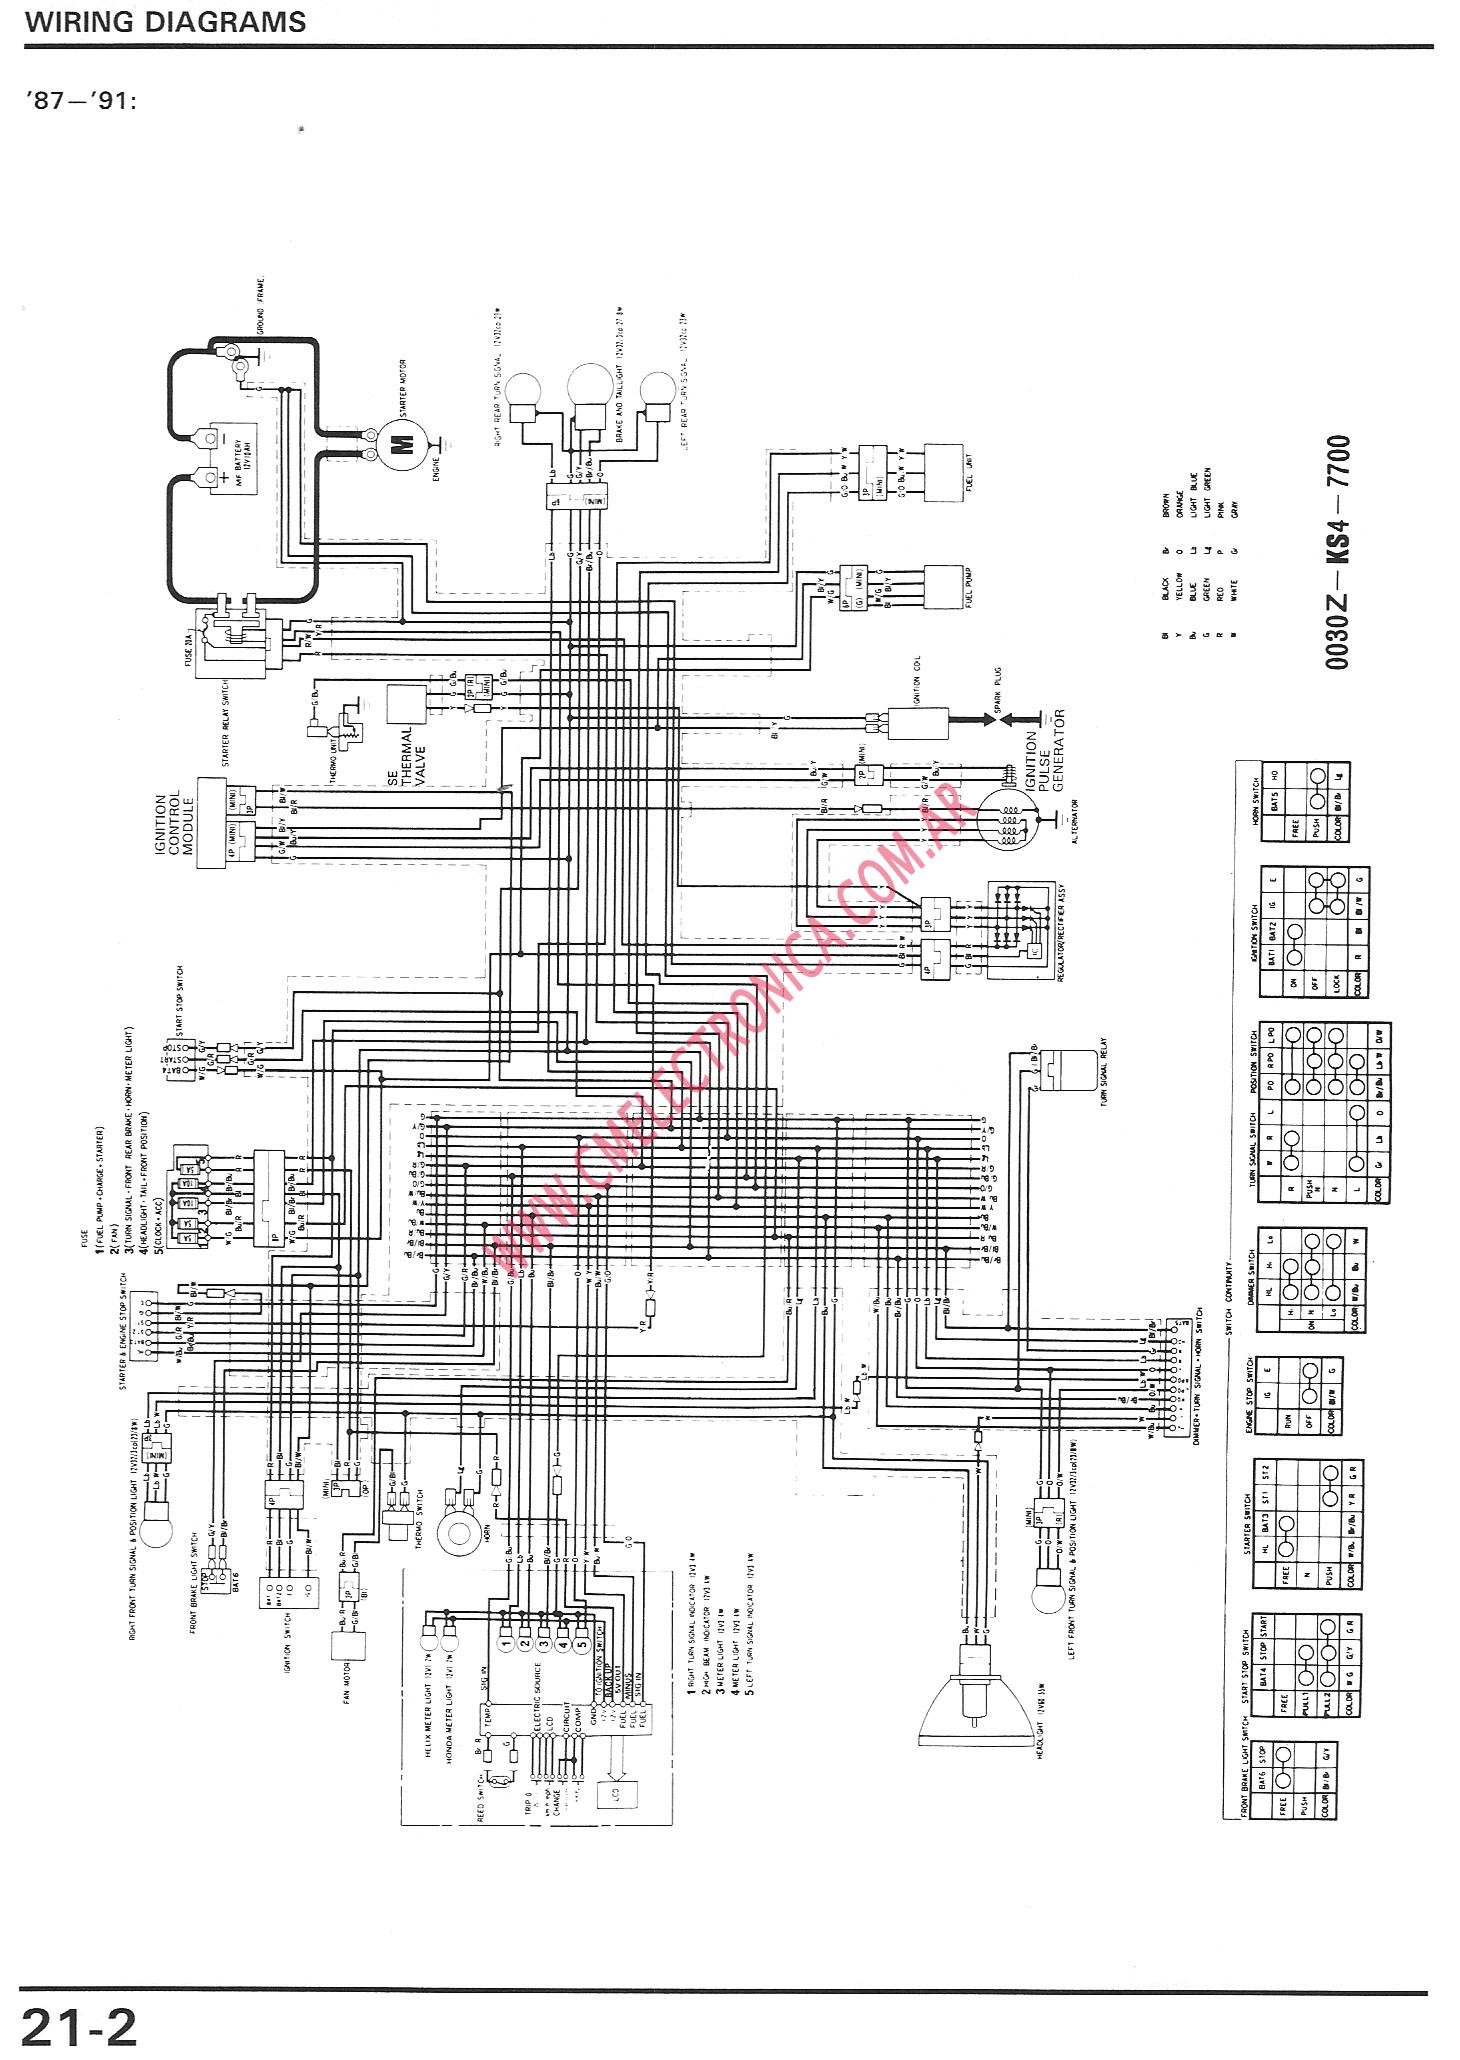 B88c57 Wiring Diagram For Daihatsu Charade Wiring Library